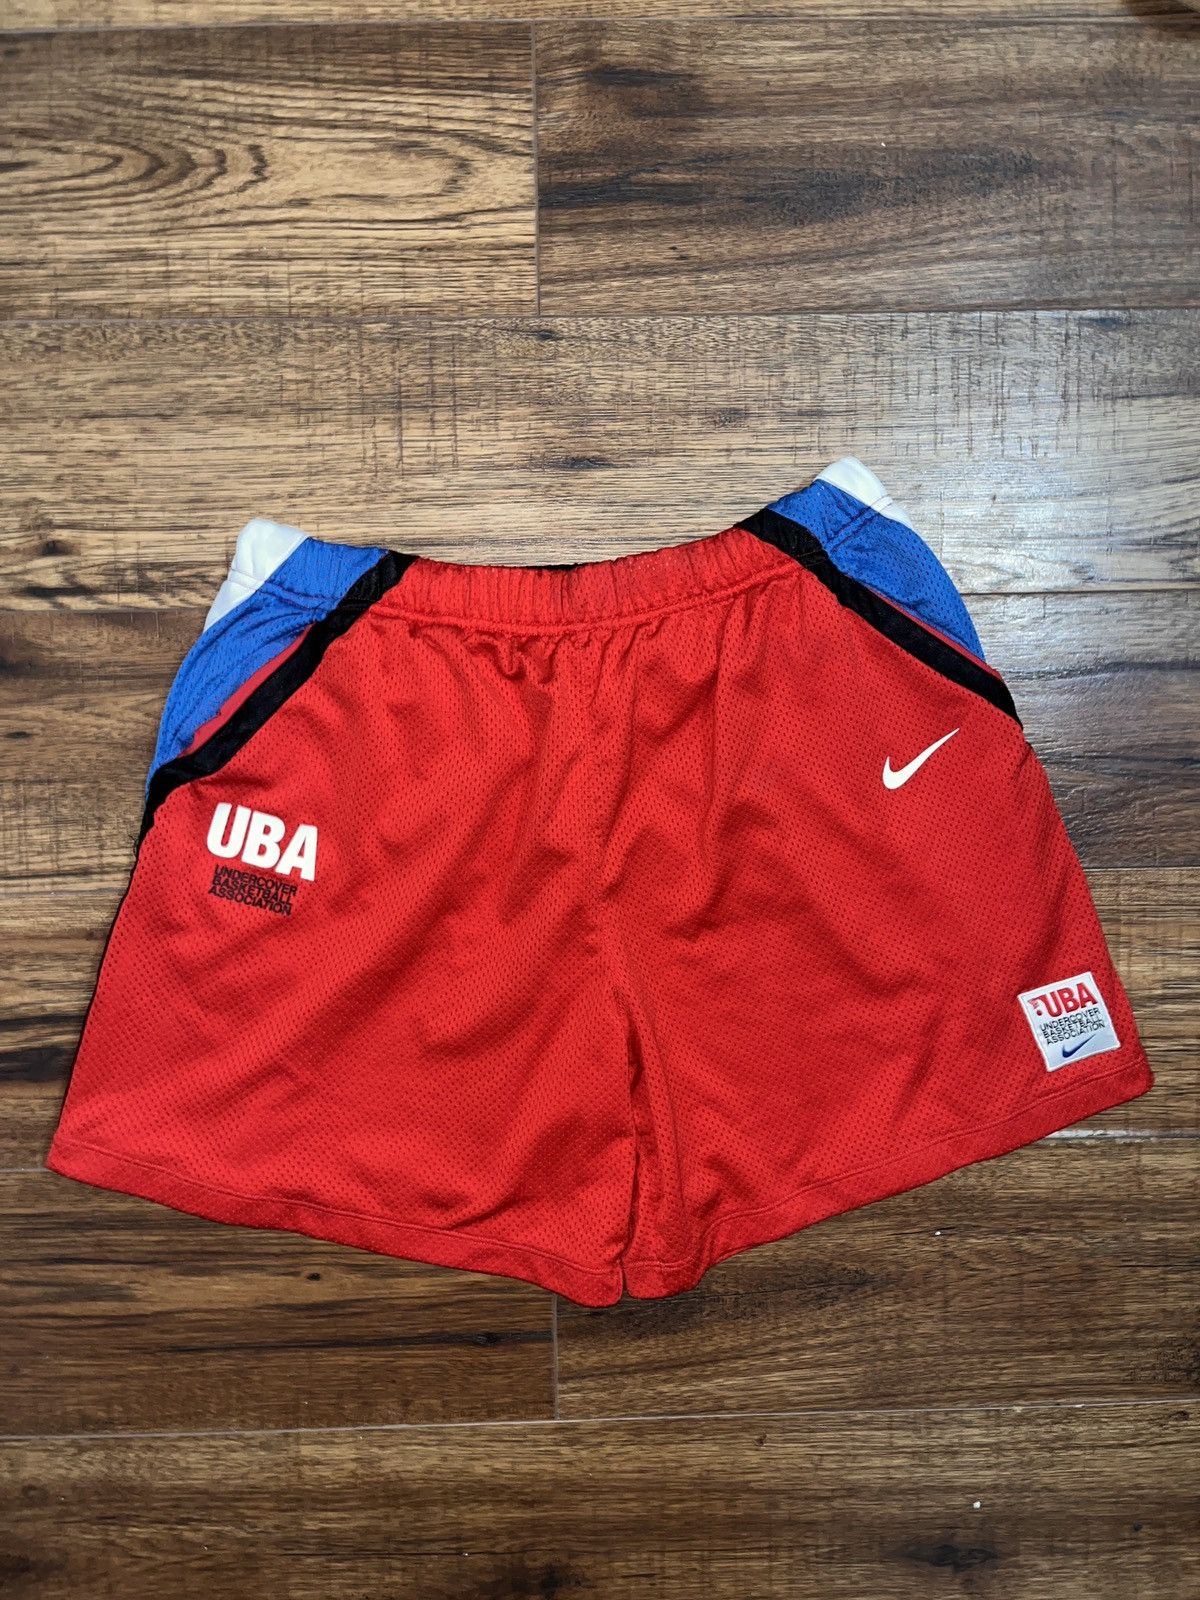 Undercover Nike Undercover UBA Basketball Shorts | Grailed